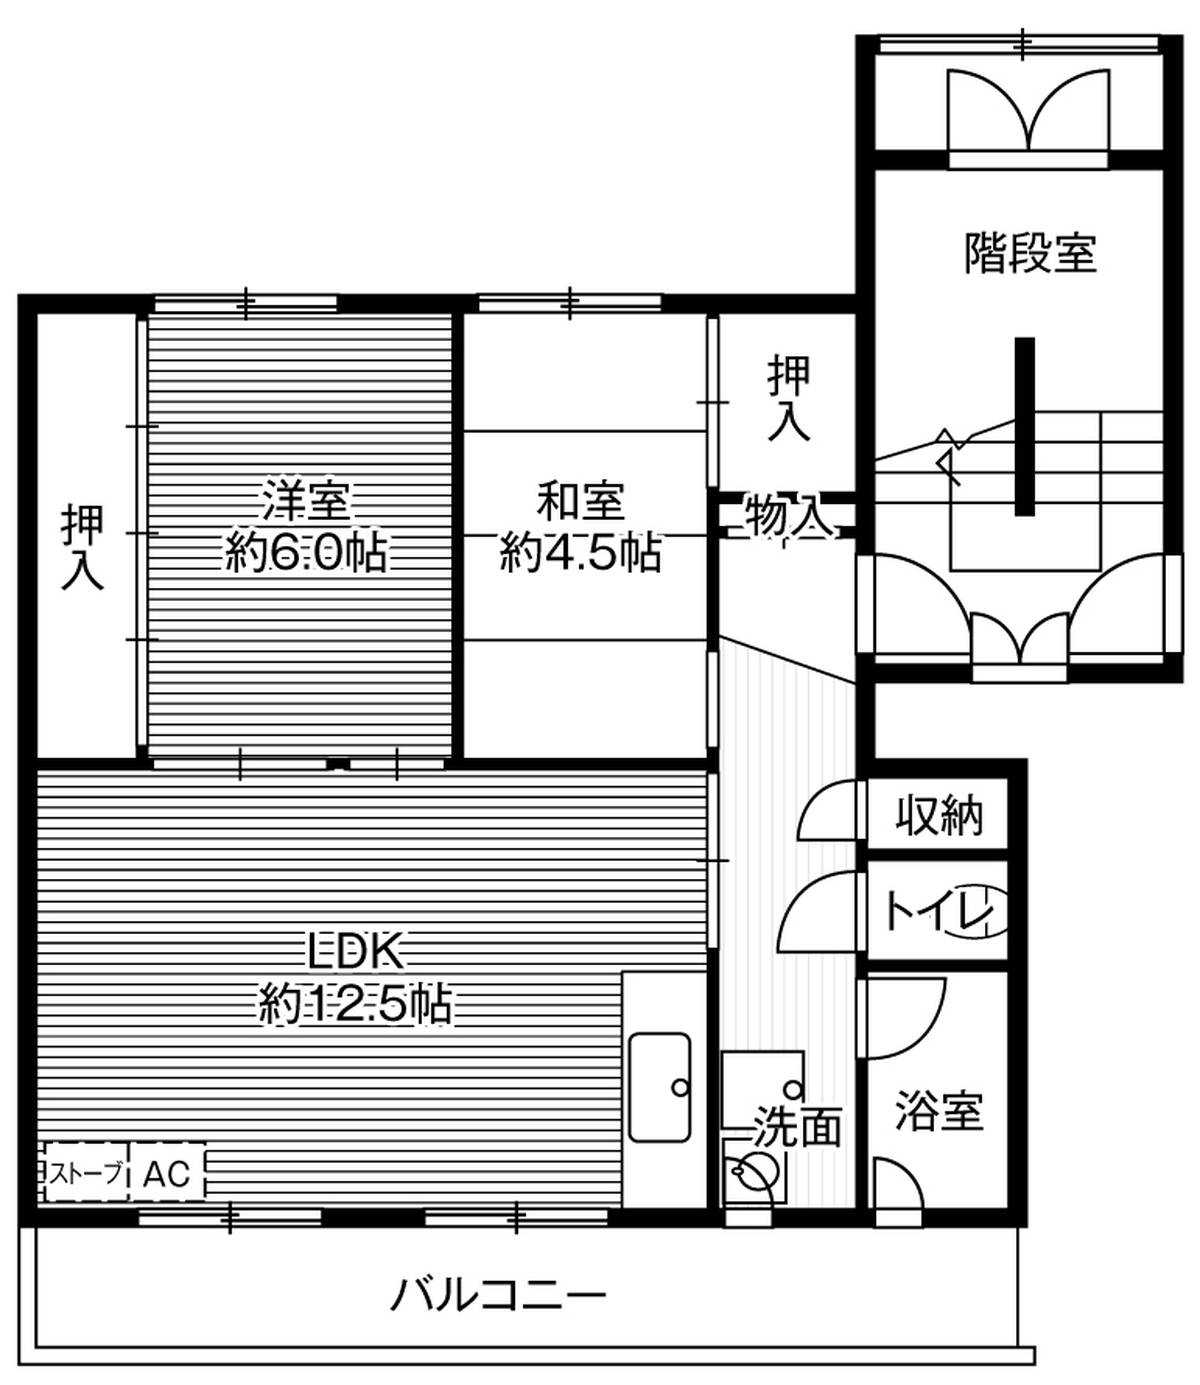 3DK floorplan of Village House Boyo in Nemuro-shi